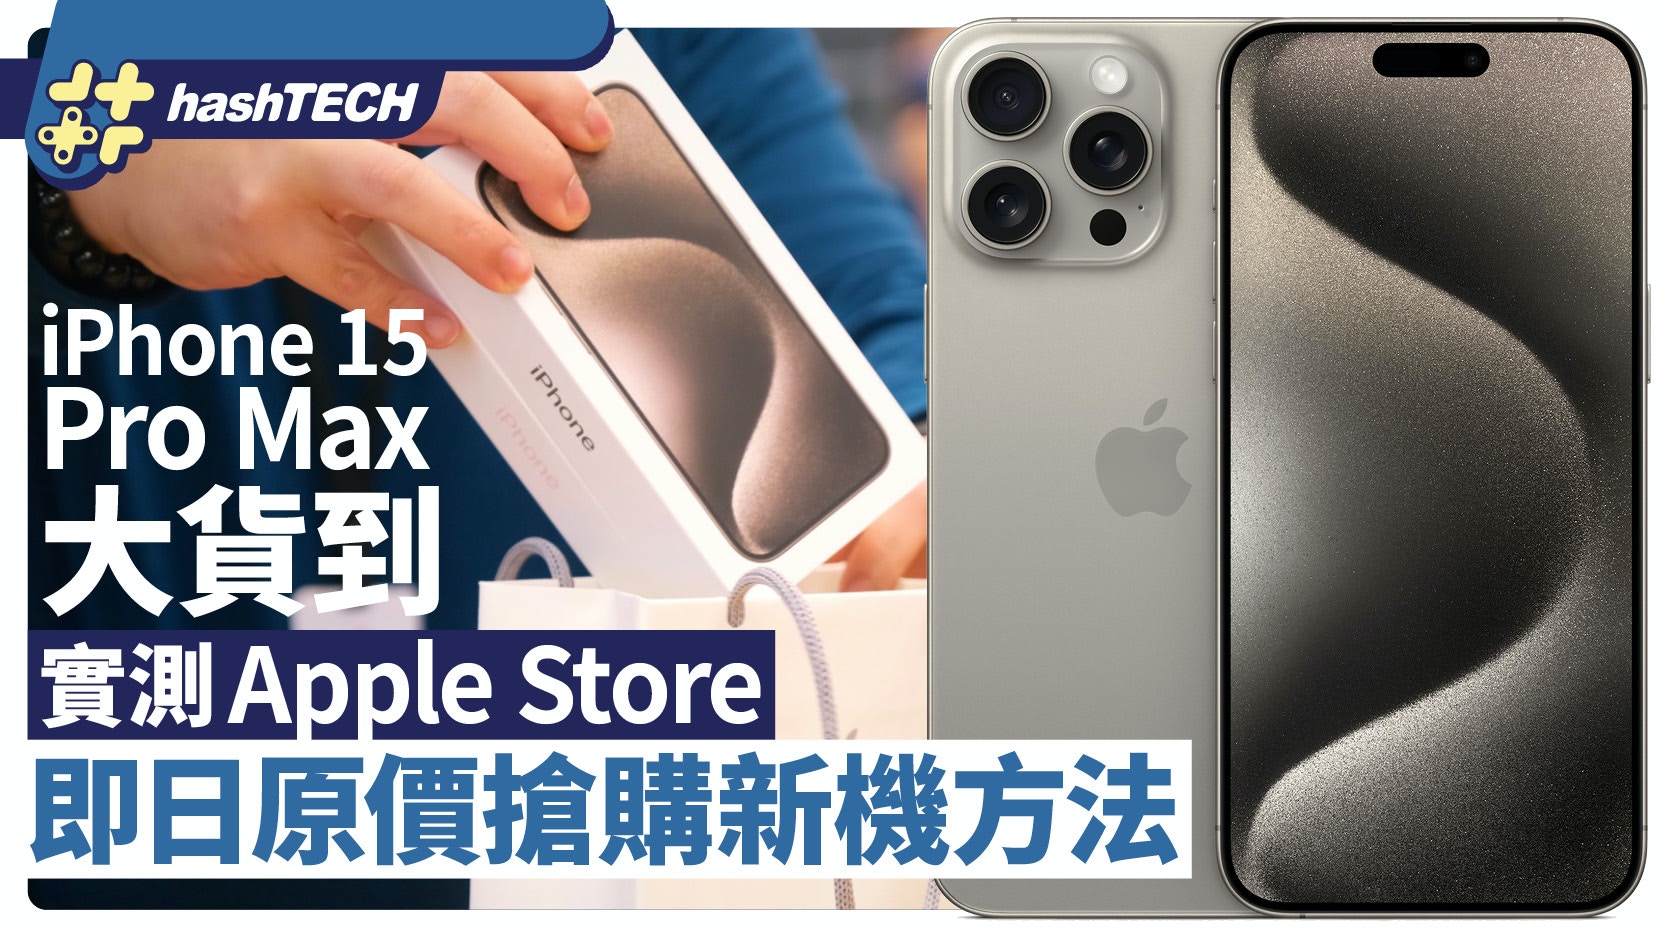 iPhone 15 Pro Max大貨到｜實測Apple Store即日原價搶買新機方法